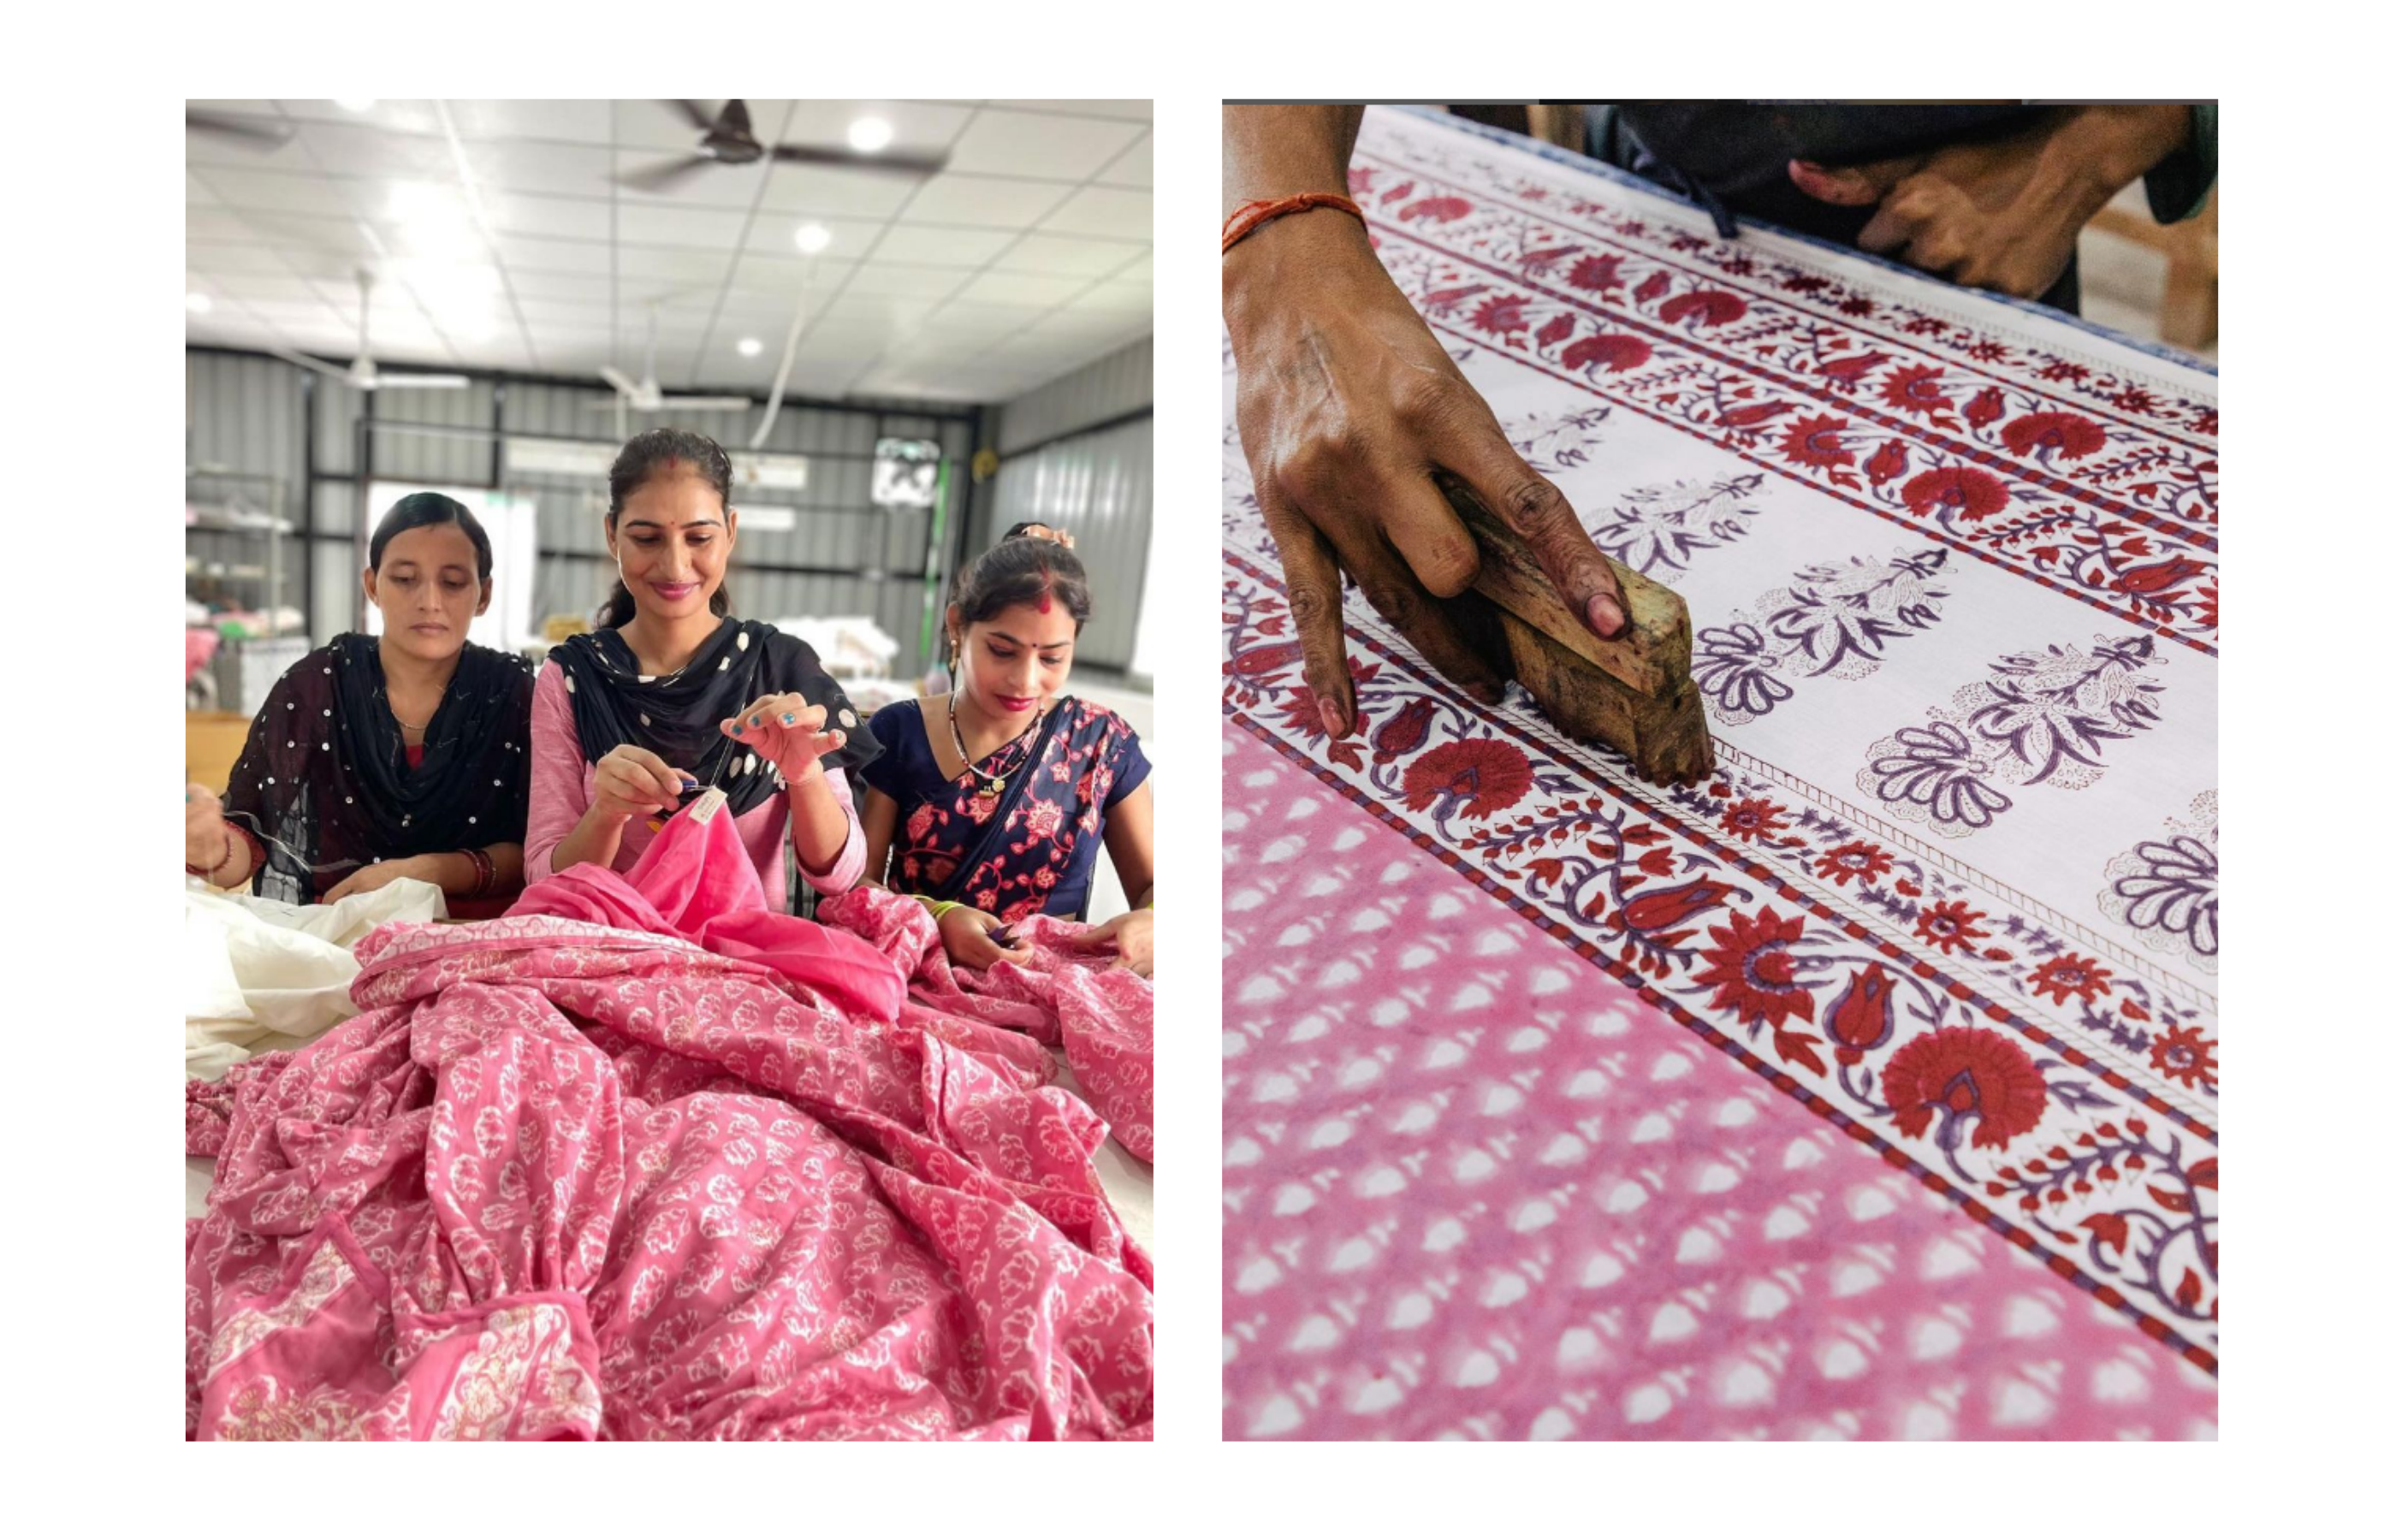 Artisans in India stitching dresses